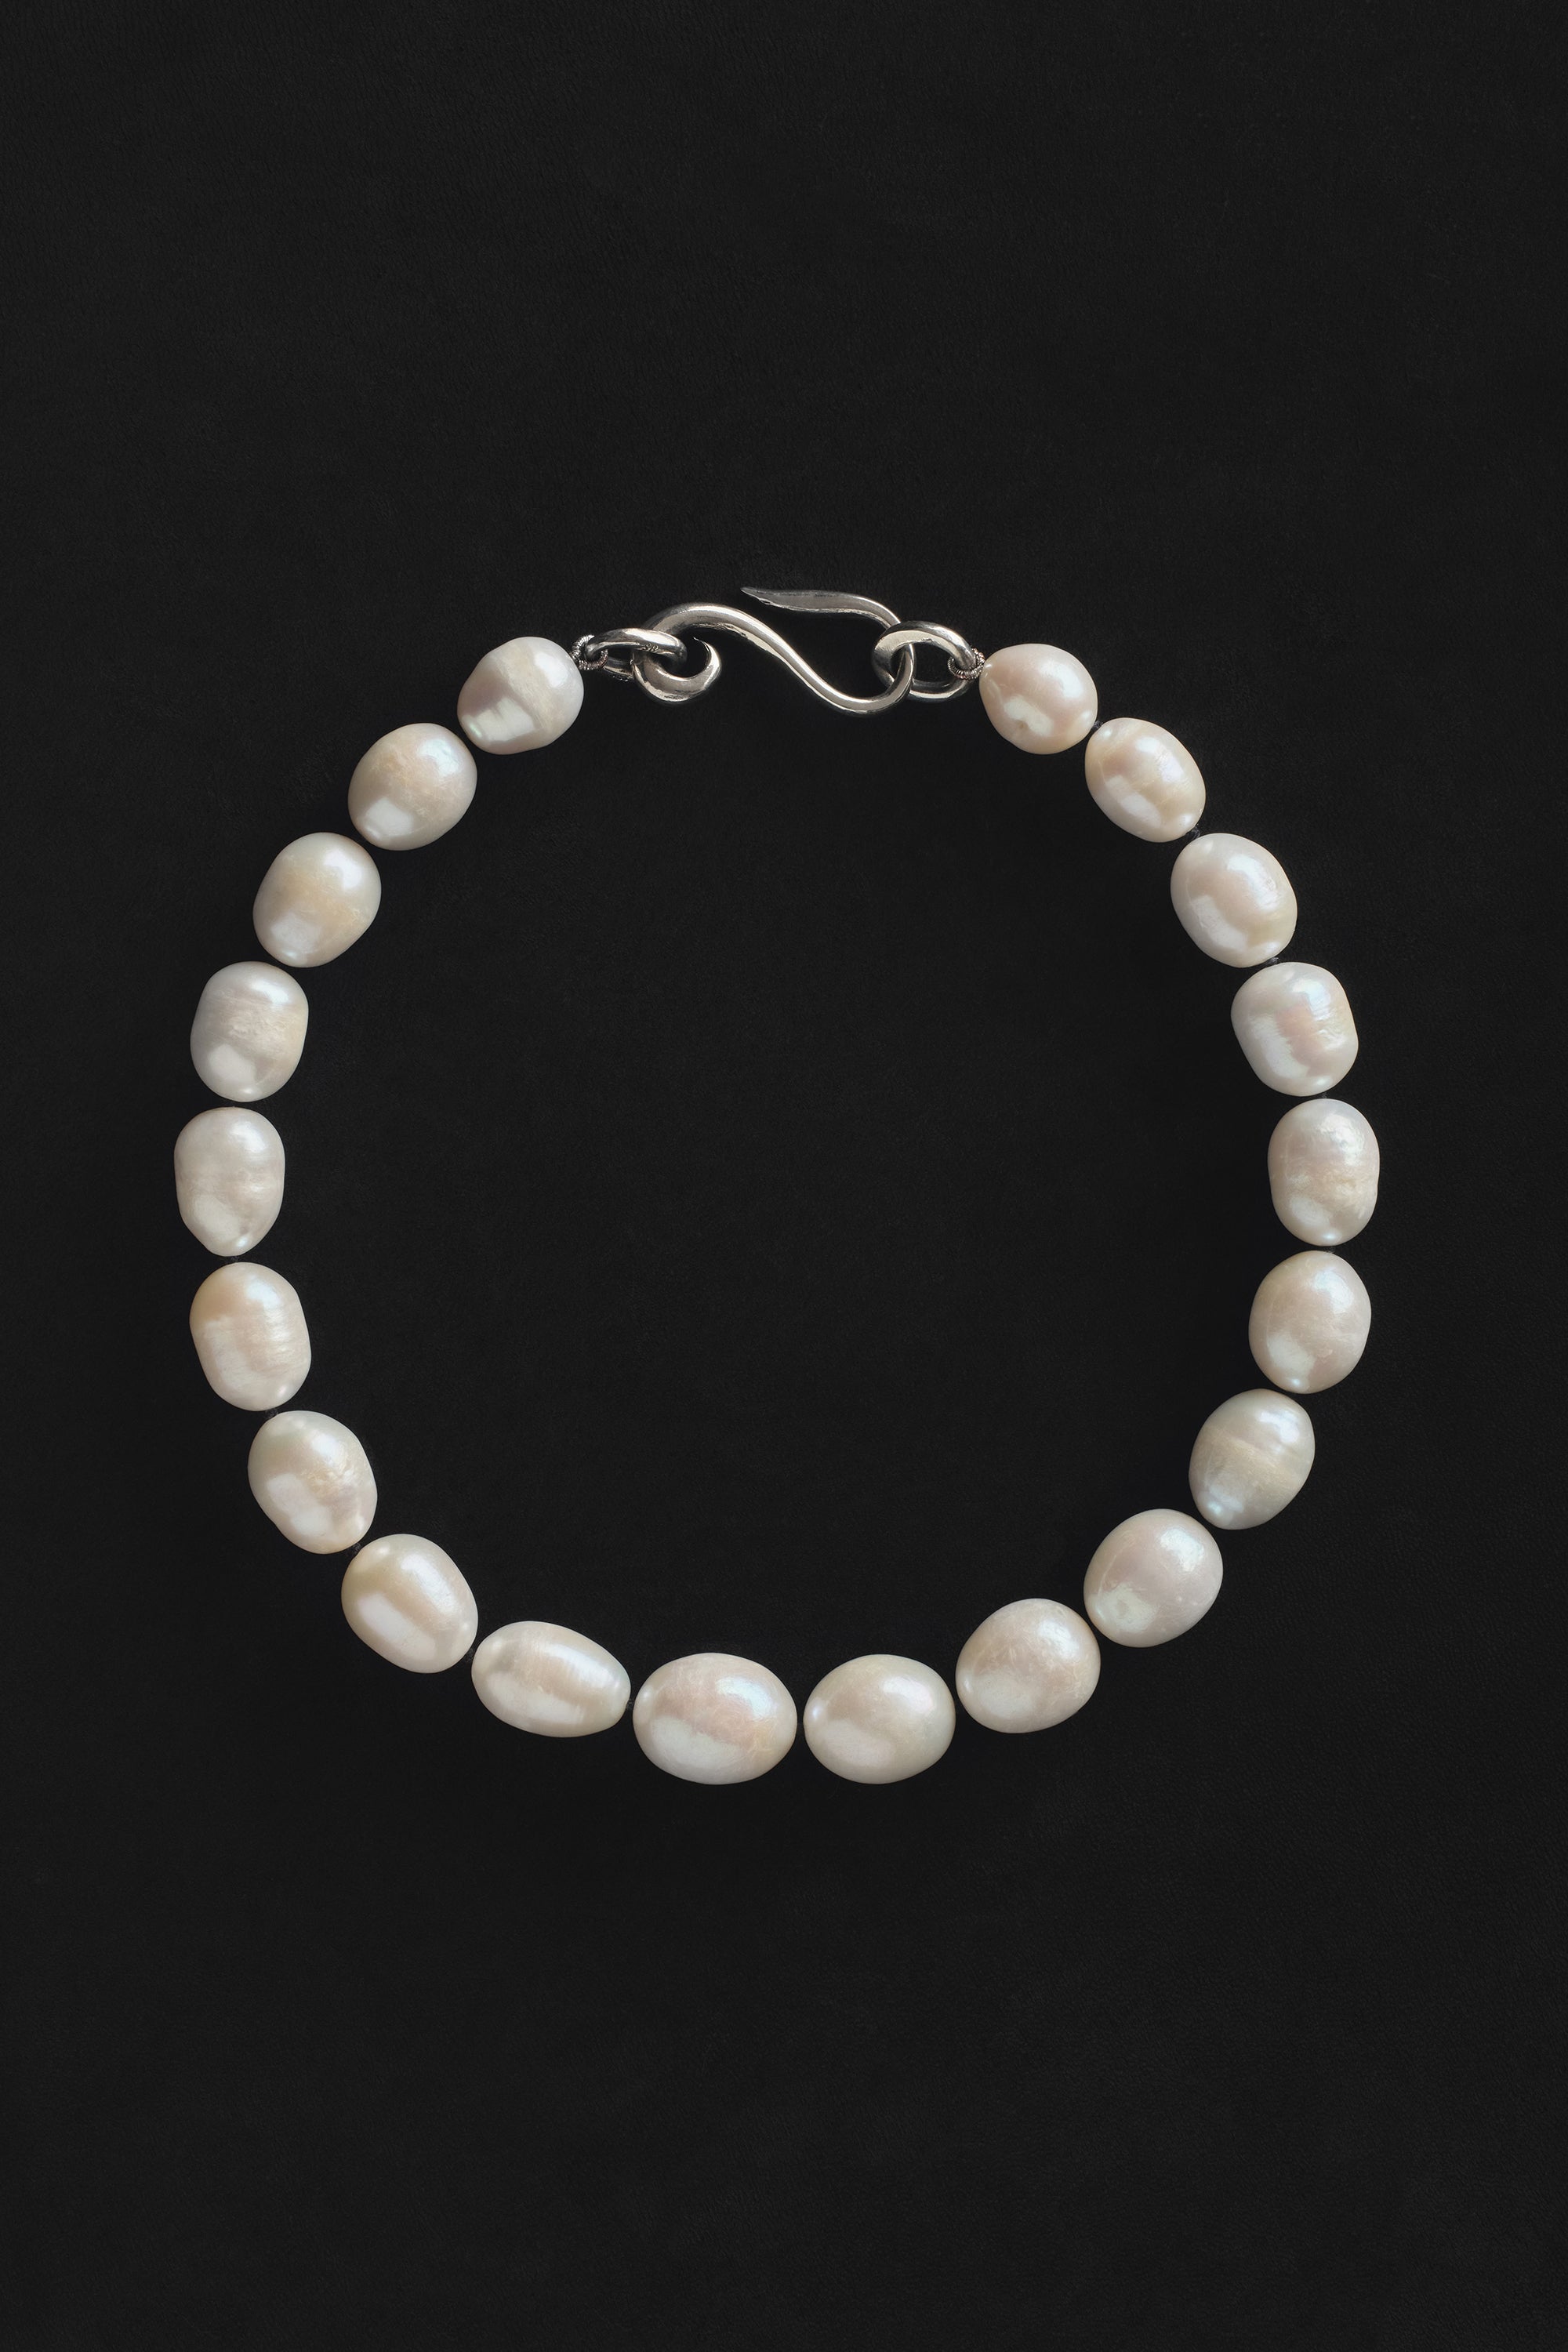 SOPHIE BUHAI fresh pearl ring #13 54000円